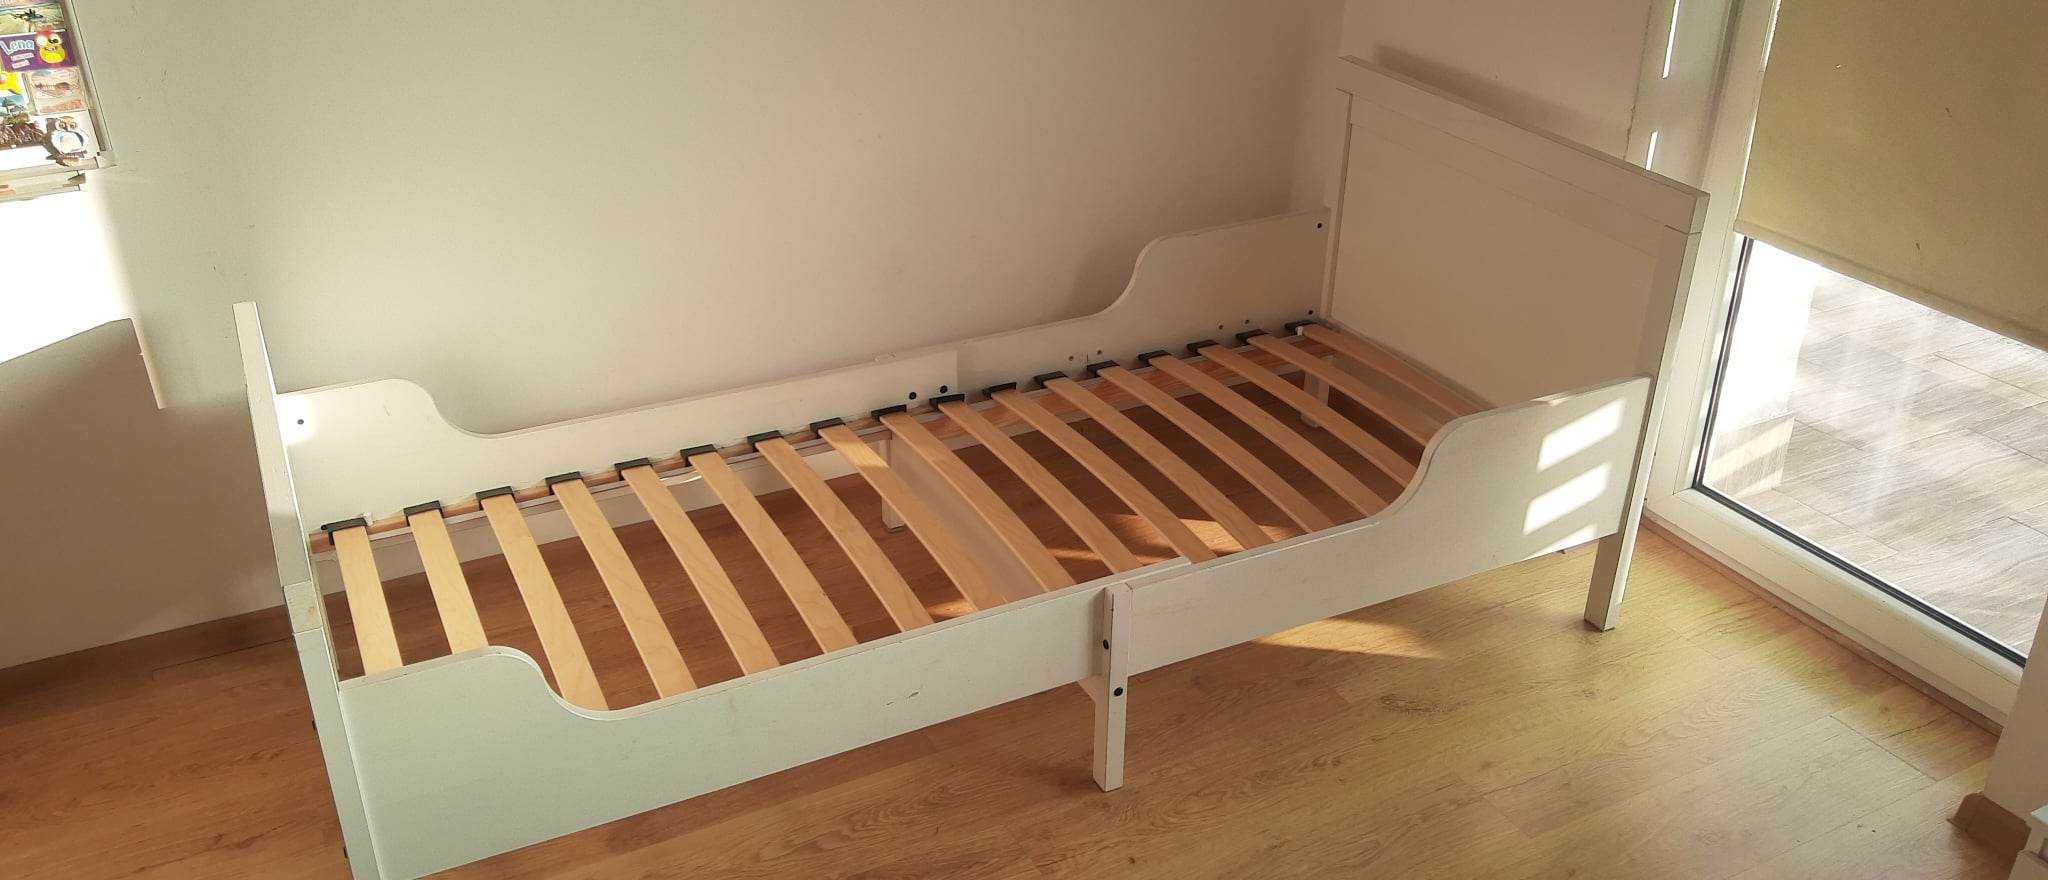 Łóżko Ikea SUNDVIK 91 x 207 regulowane z materacem i stelażem